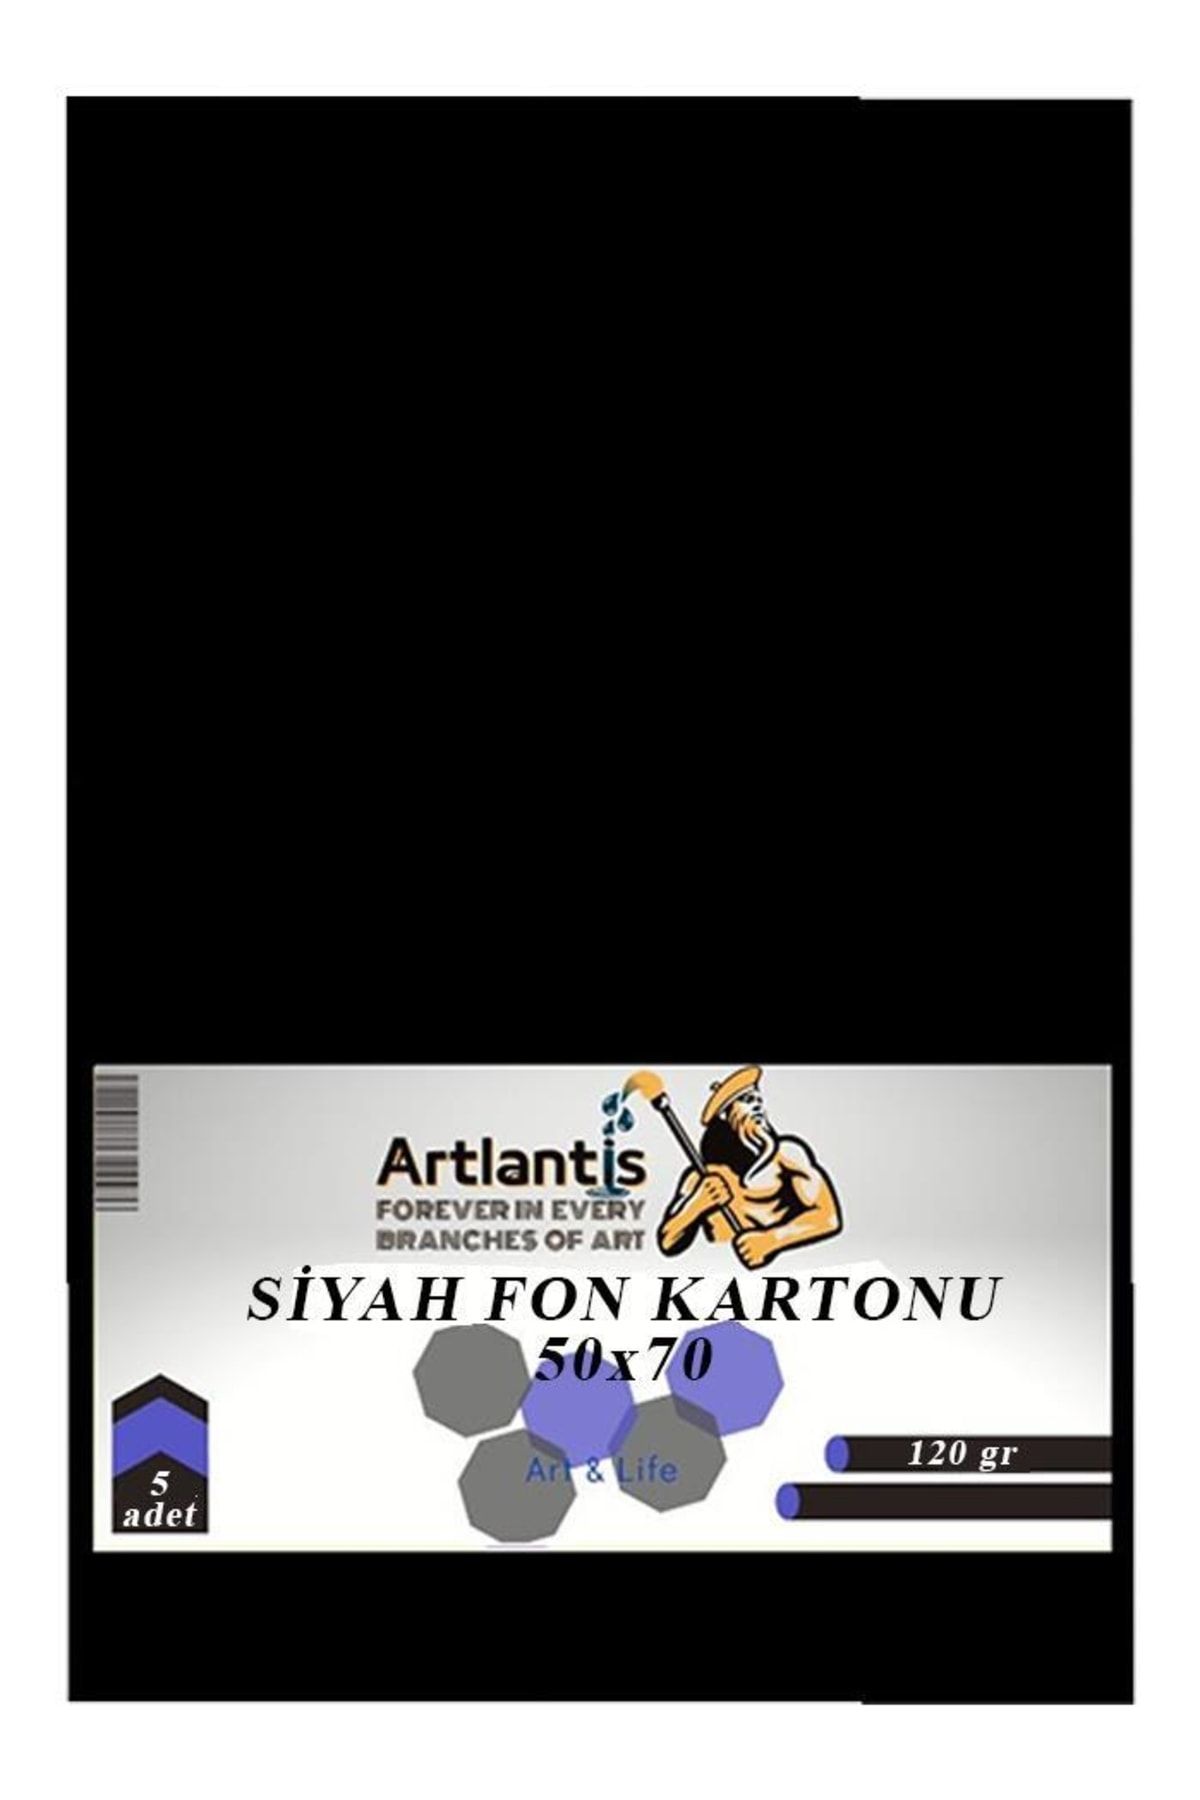 Artlantis Siyah Fon Kartonu 50x70 Cm 120 Gr 5 Adet 50*70 Fon Kartonu Hamurundan Boyama Orjinal Tam Siyah Renk